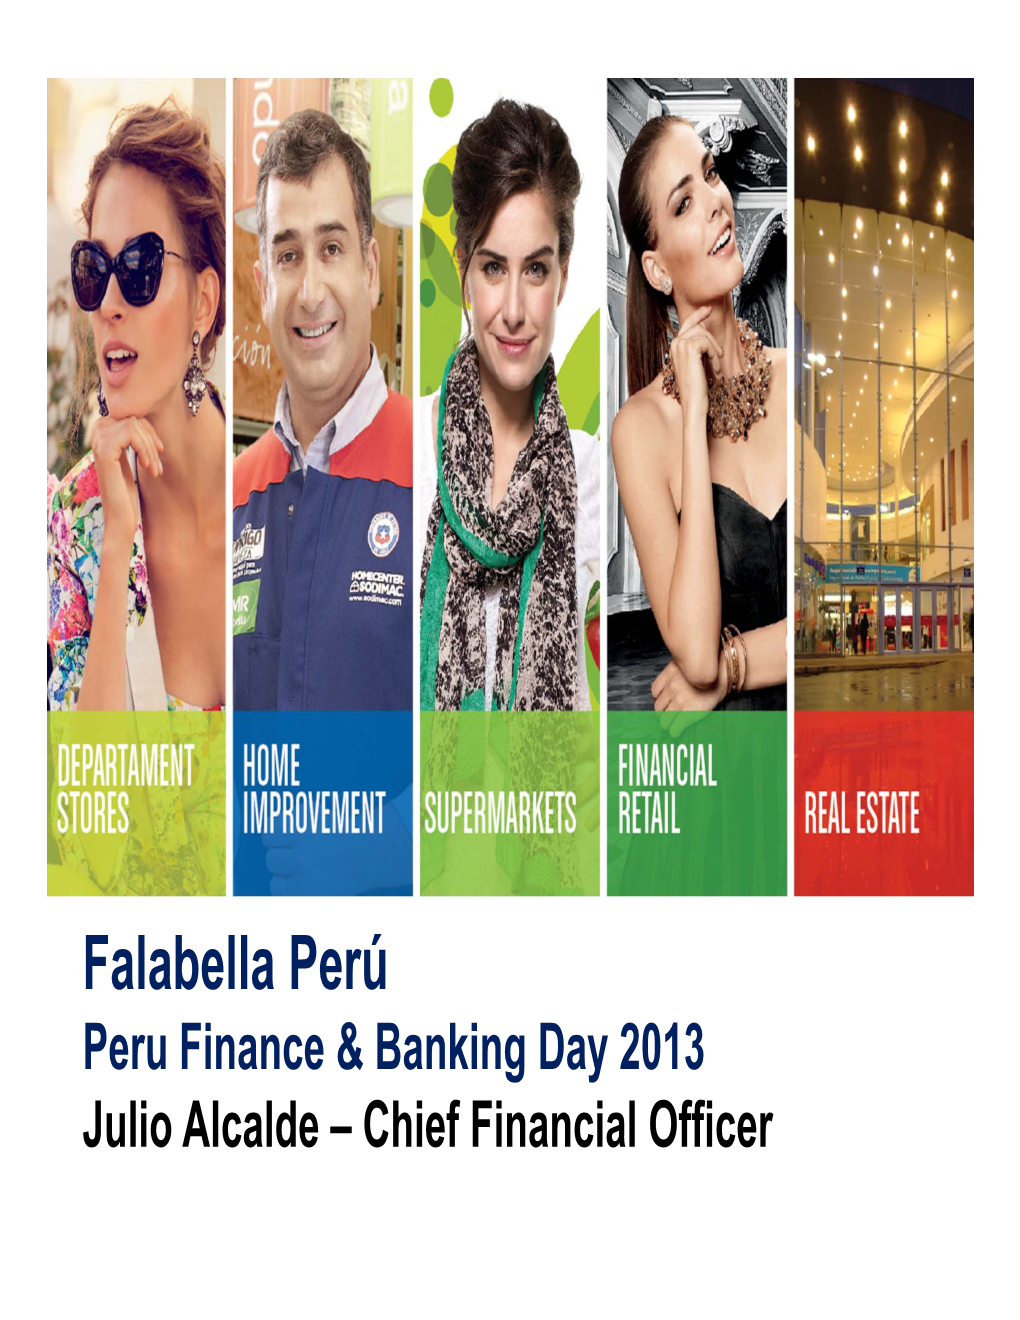 Falabella Perú Peru Finance & Banking Day 2013 Julio Alcalde – Chief Financial Officer Falabella at a Glance